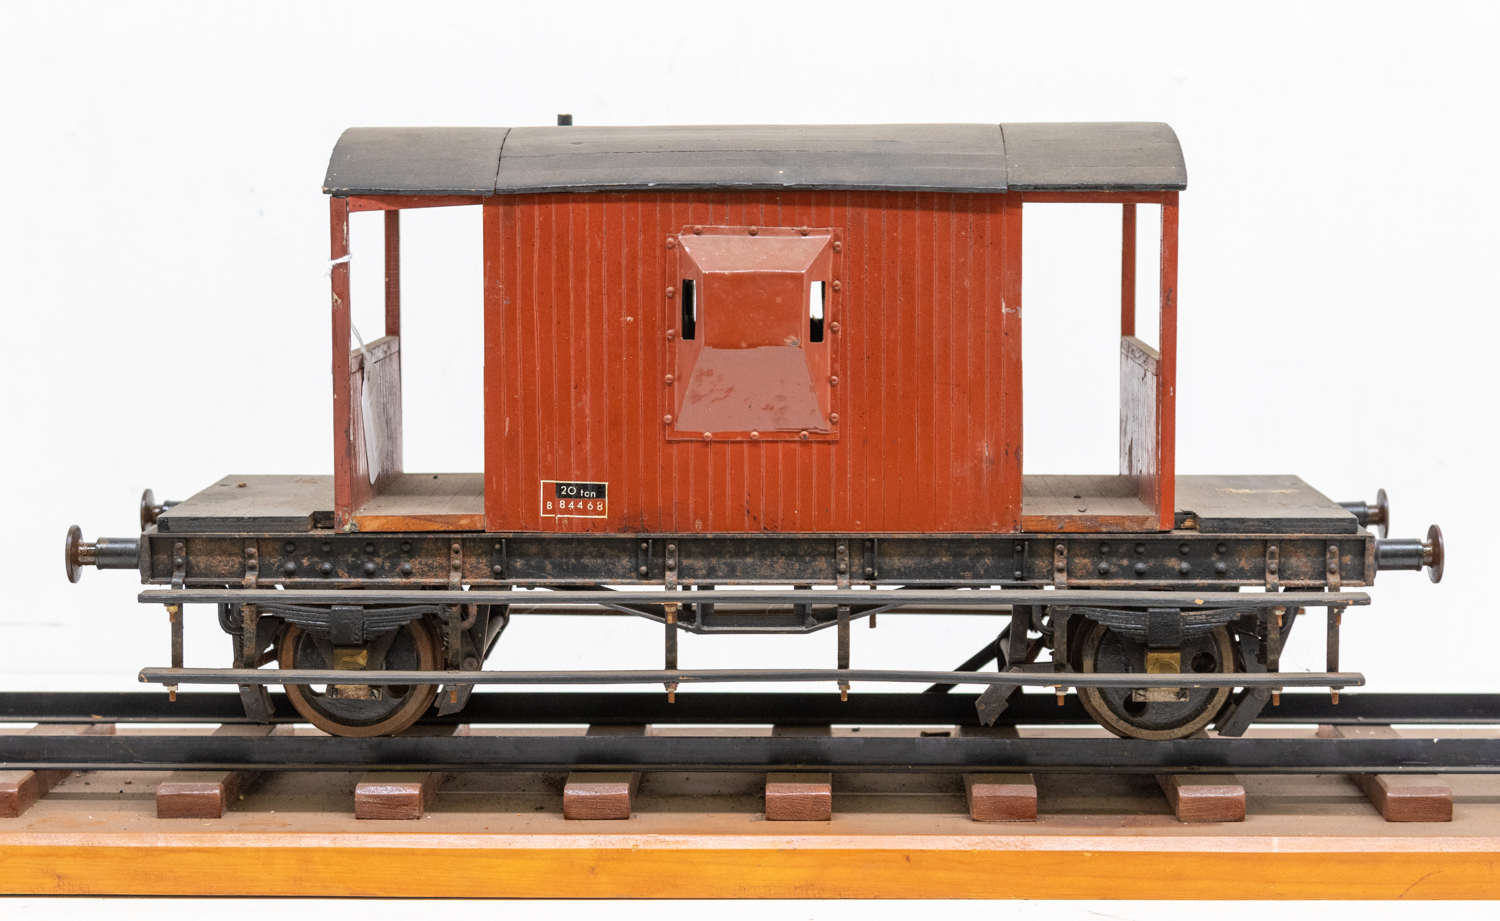 Model Railway: A scratch-built model railway, 3 1/2" gauge, rolling stock wagon, upon track, 20 Ton, - Bild 2 aus 4